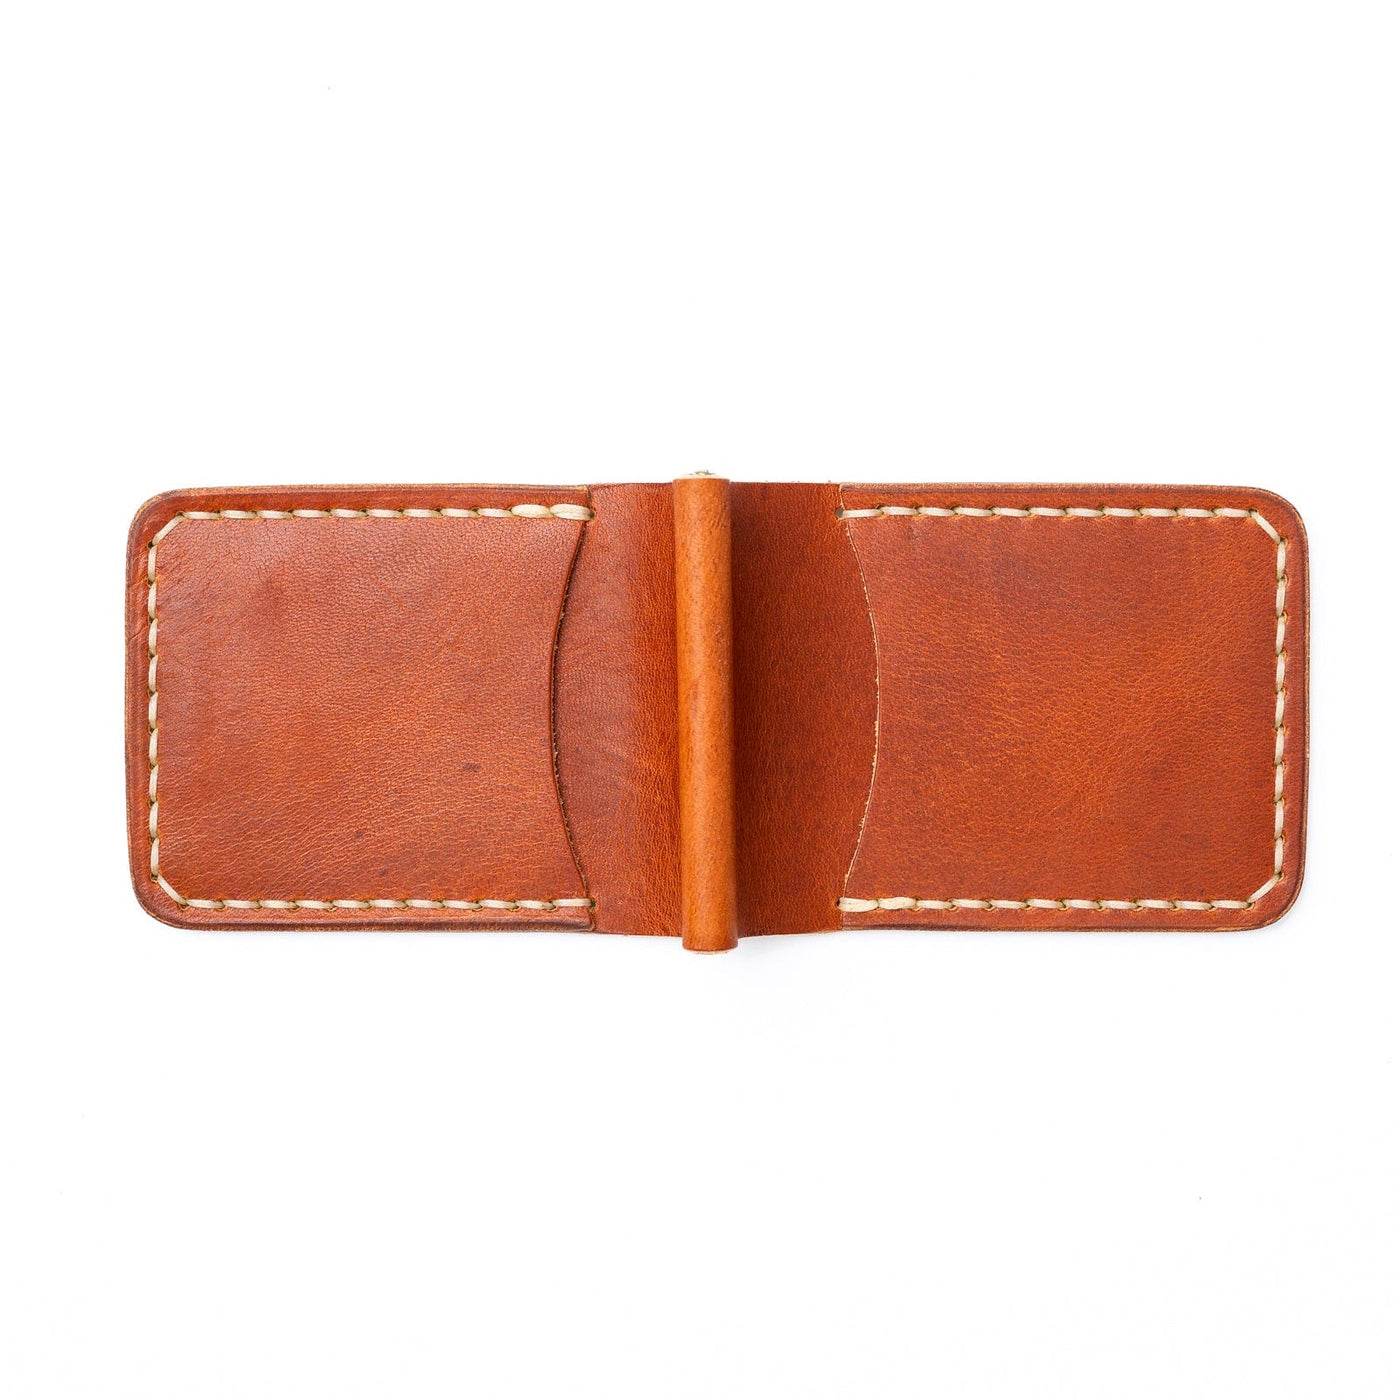 Leather Money Clip Wallet - English Tan Popov Leather